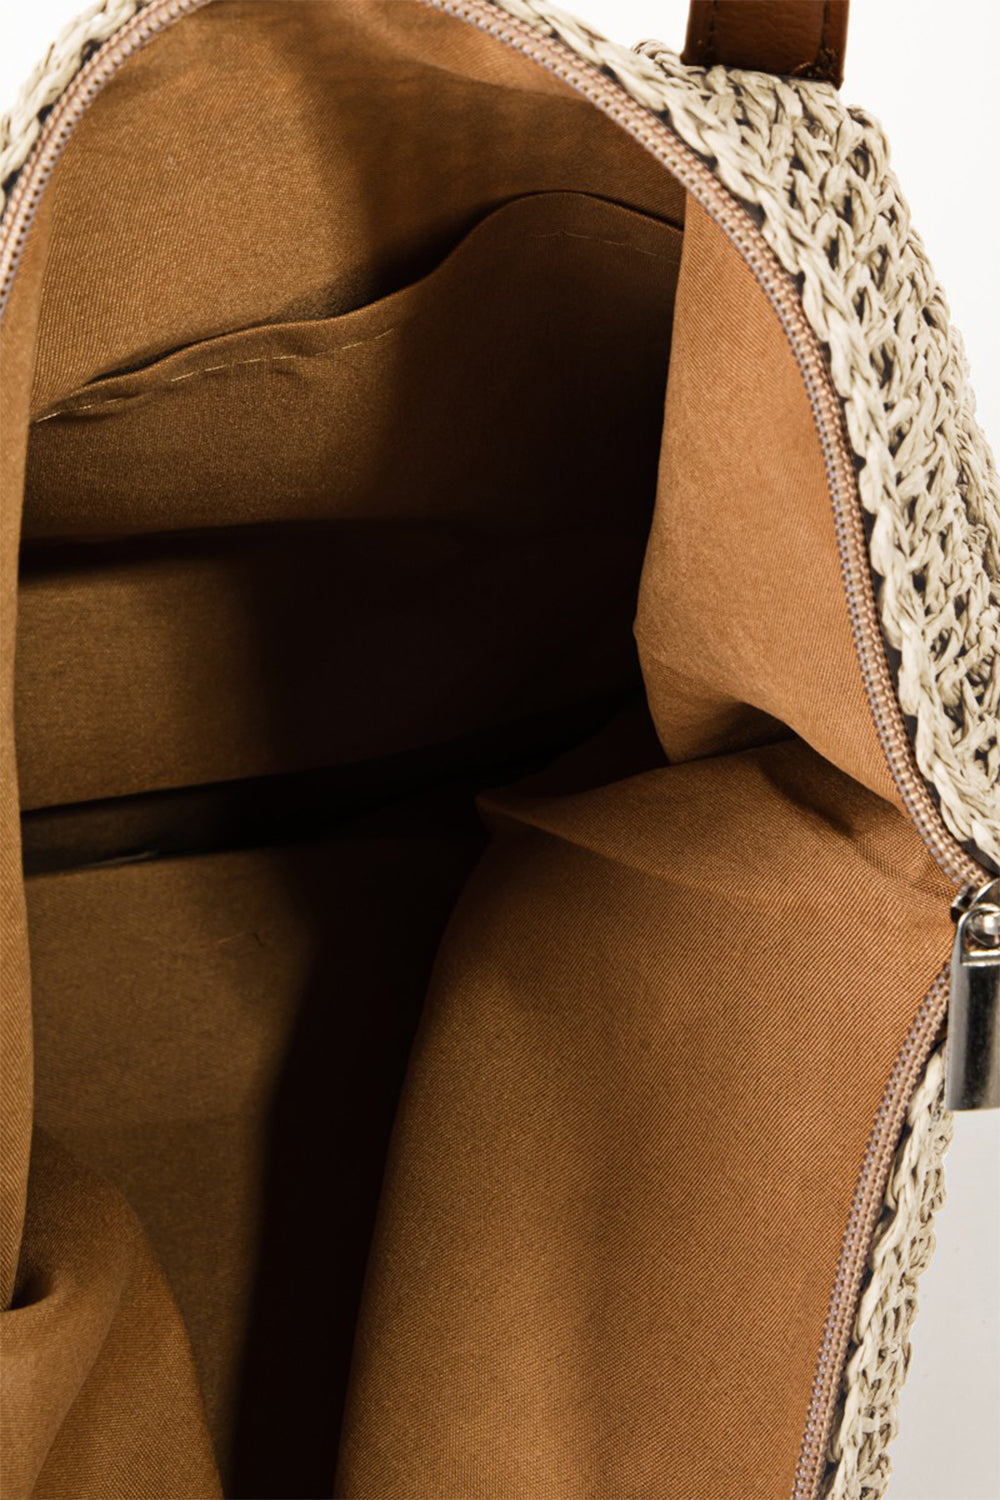 TEEK - Ivory Fame Braided Faux Leather Strap Tote Bag BAG TEEK Trend   